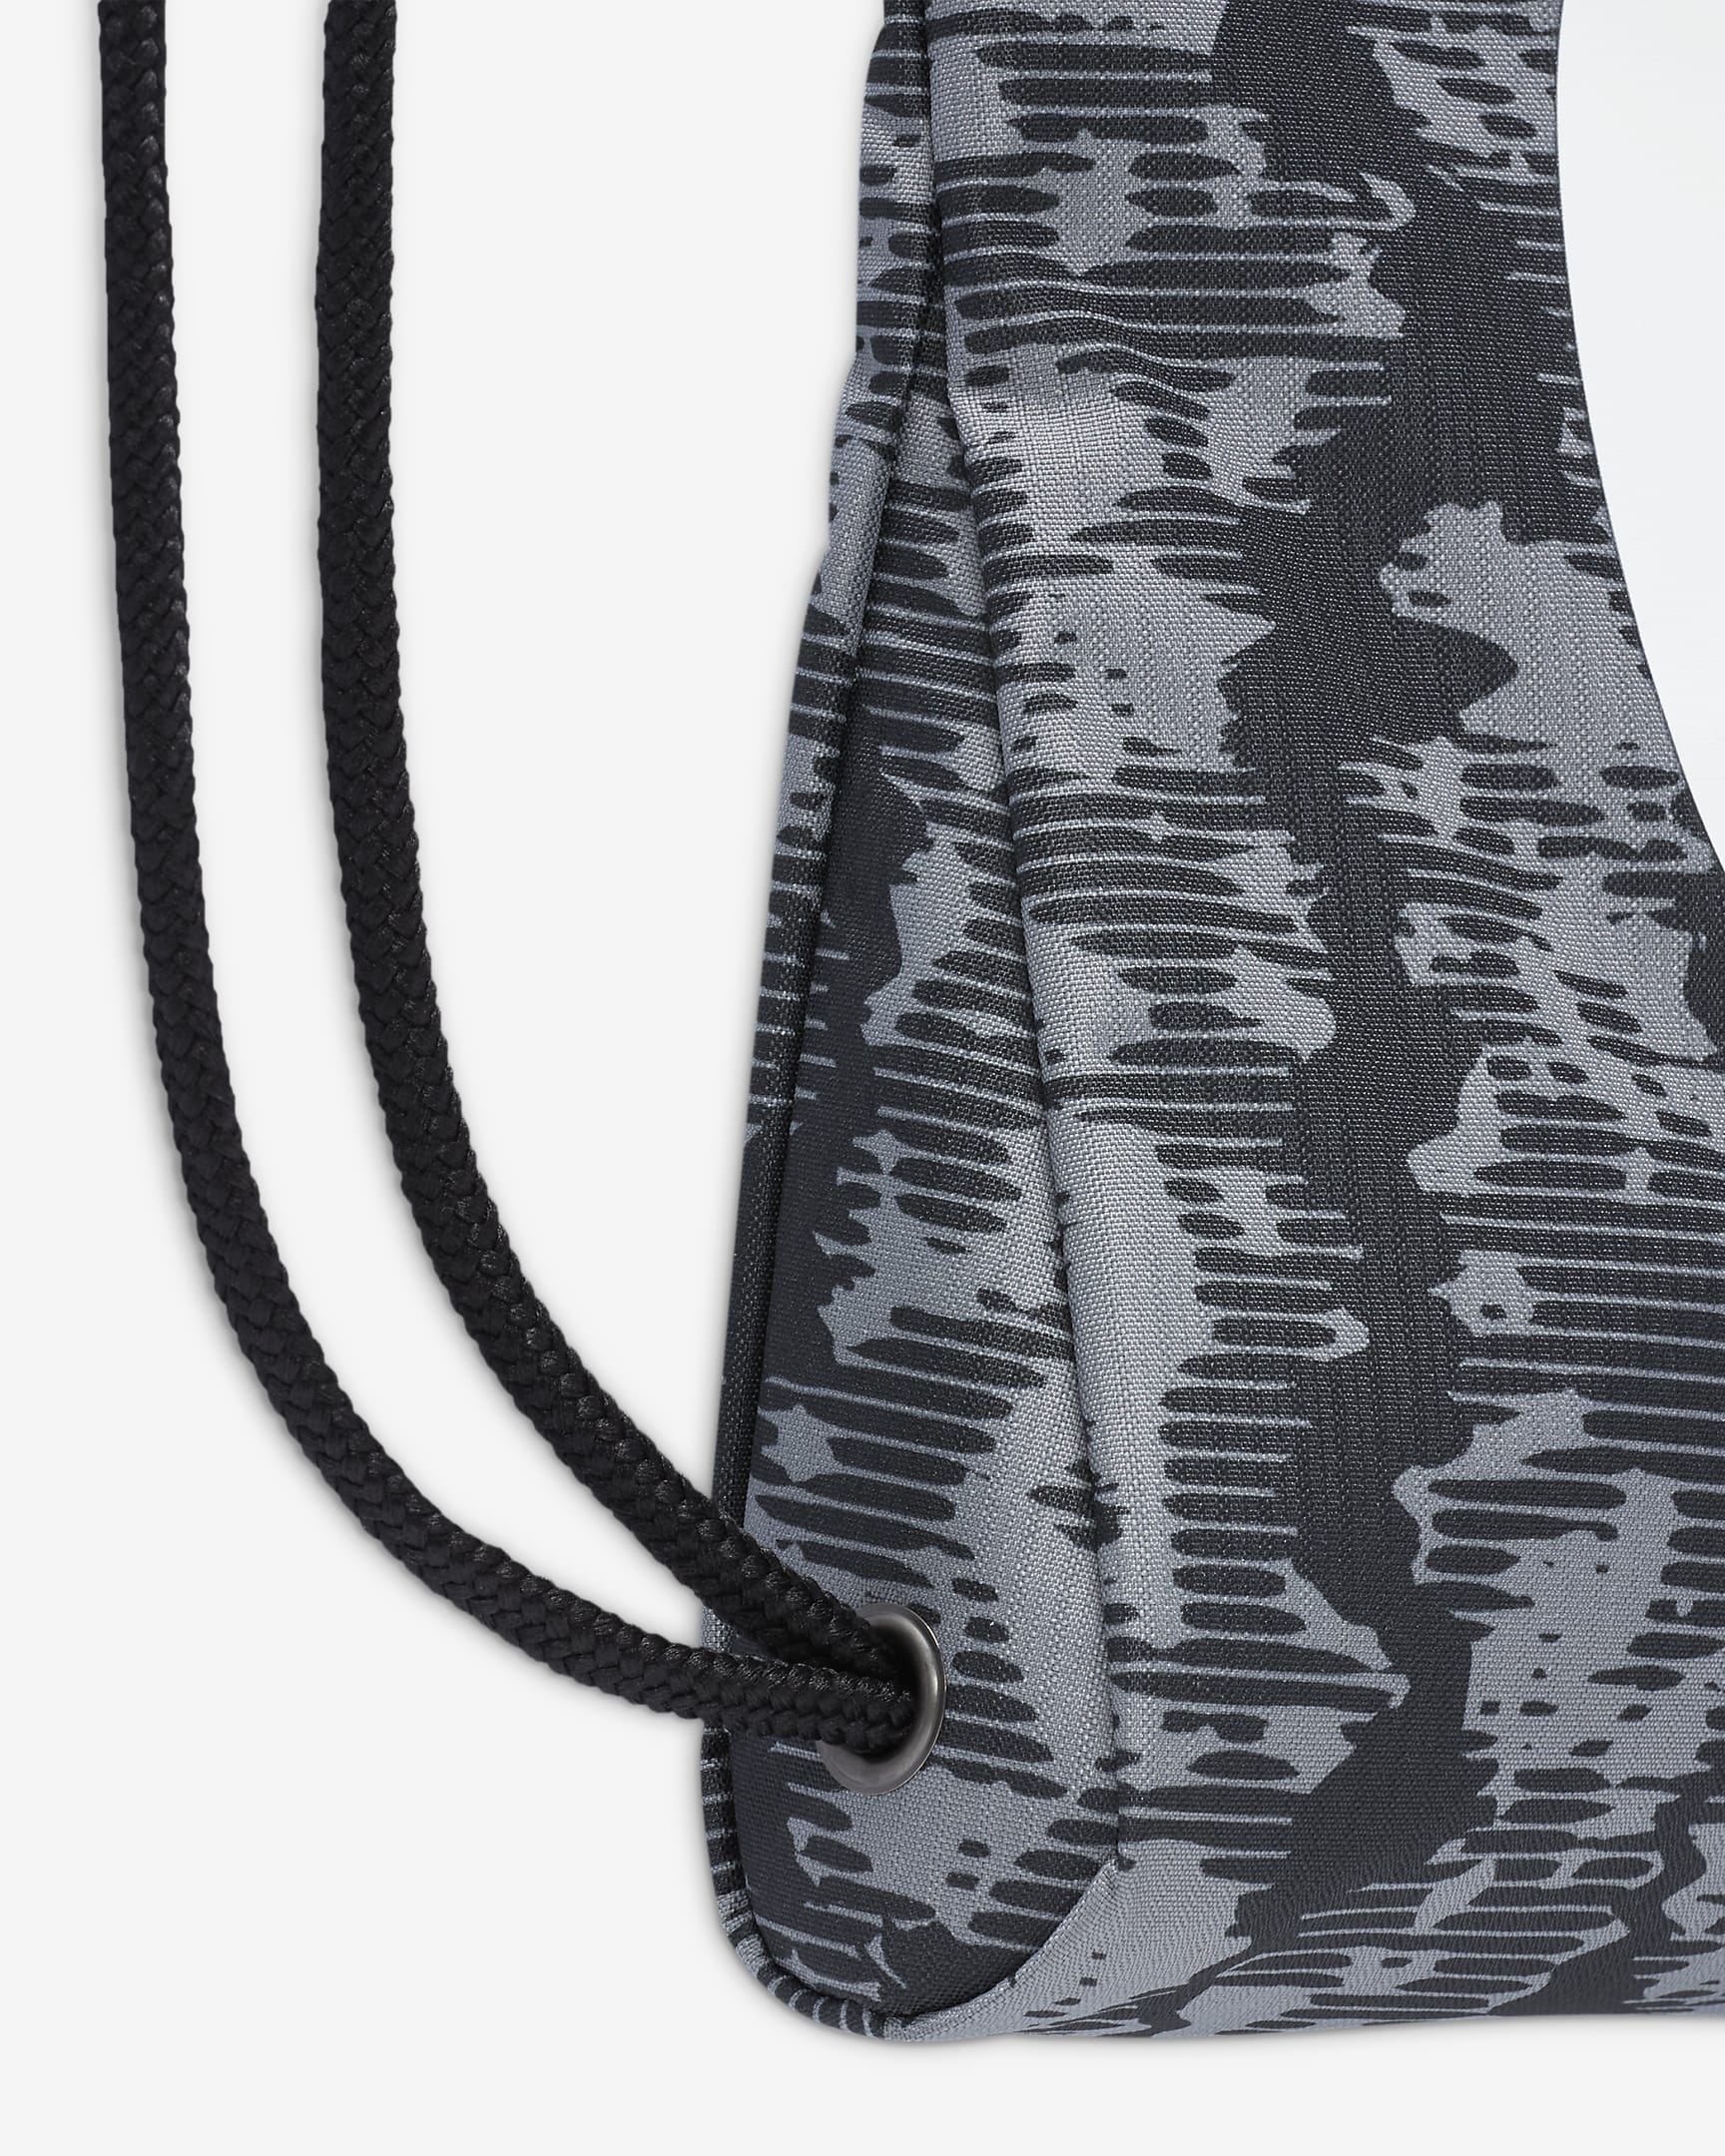 Nike Kids' Drawstring Bag (12L) - Anthracite/Black/White